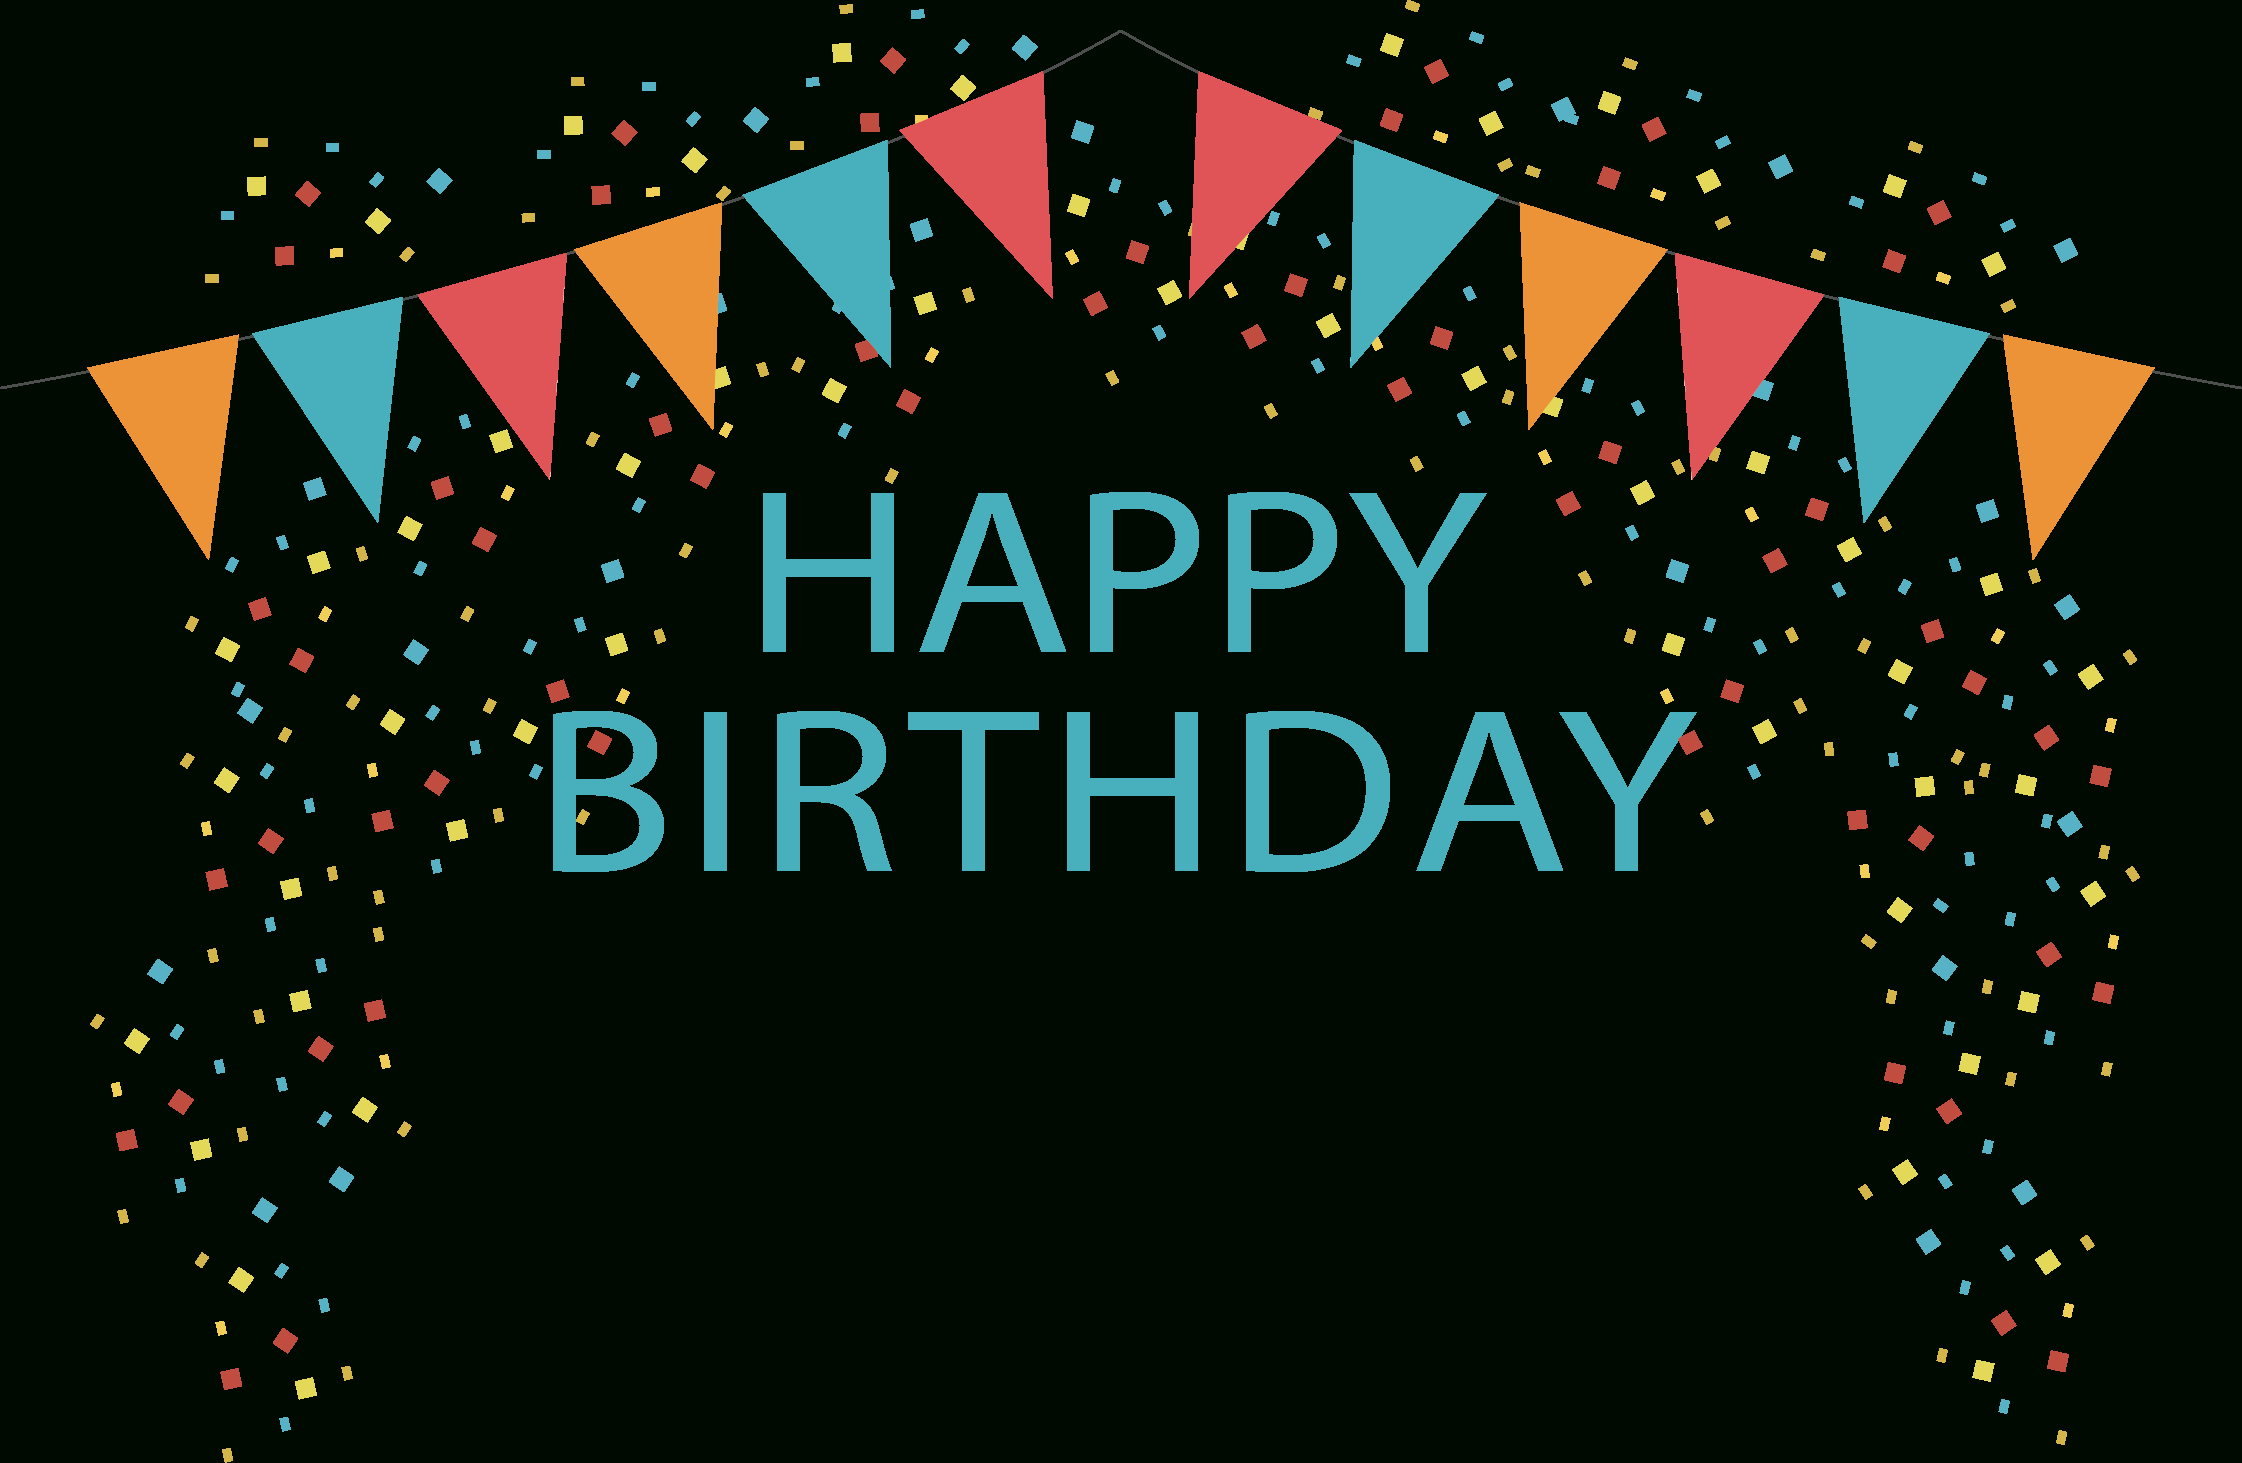 Happy Birthday Banner Designs Free Download – Yeppe Inside Free Happy Birthday Banner Templates Download